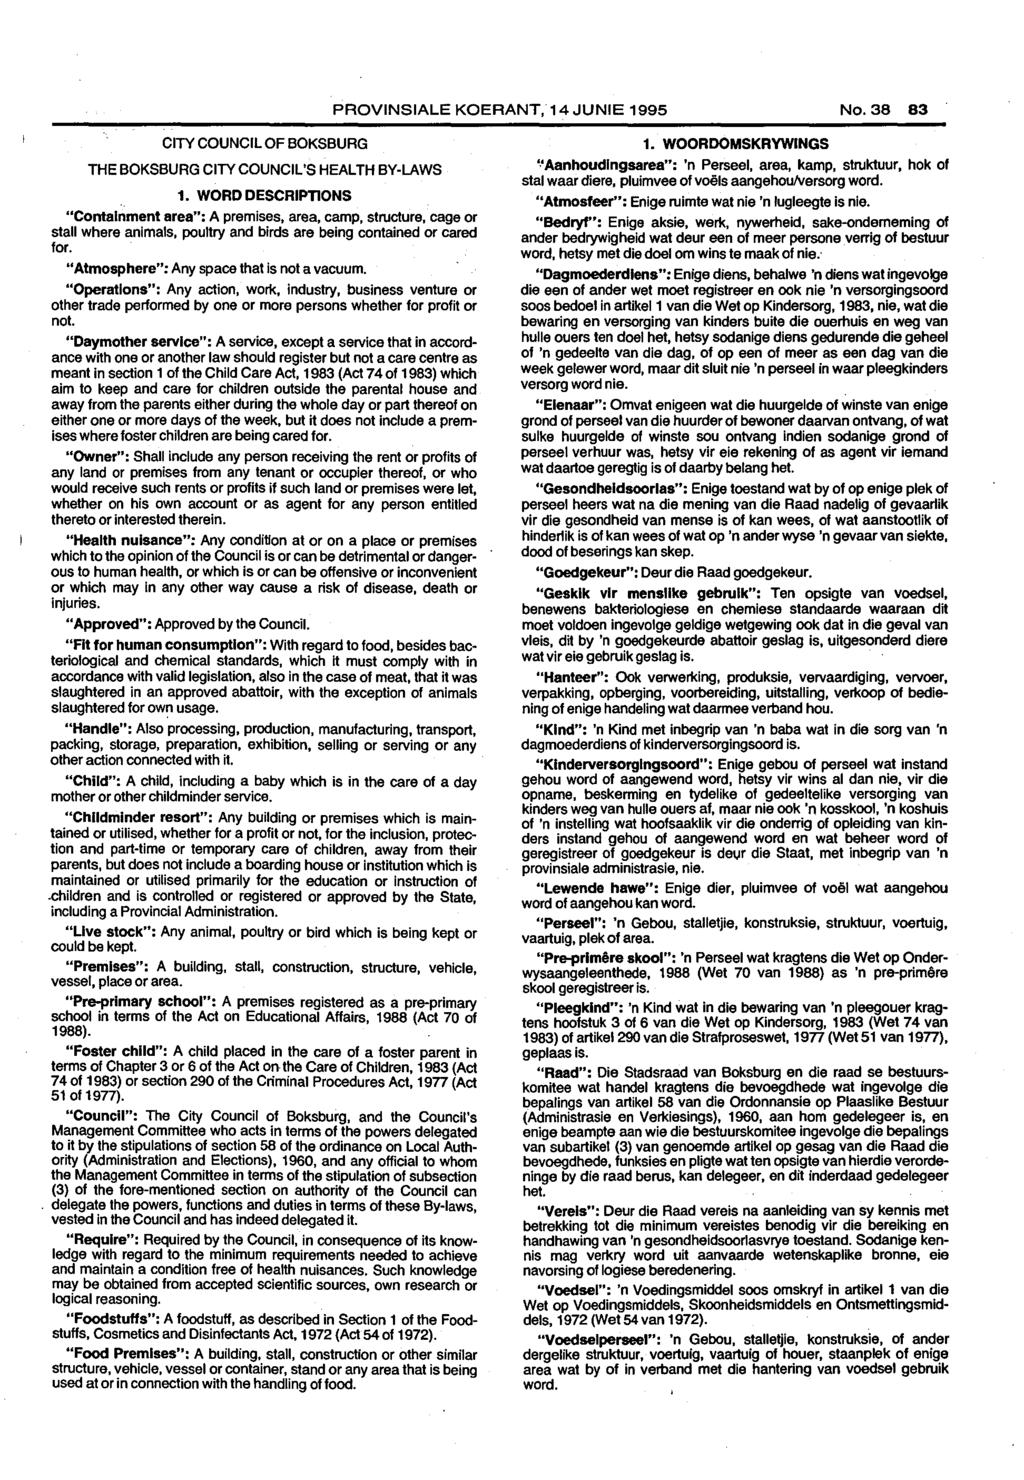 PROVINSIALE KOERANT, 14 JUNIE 1995 No. 83 CITY COUNCIL OF BOKSBURG THE BOKSBURG CITY COUNCIL'S HEALTH BY-LAWS 1.